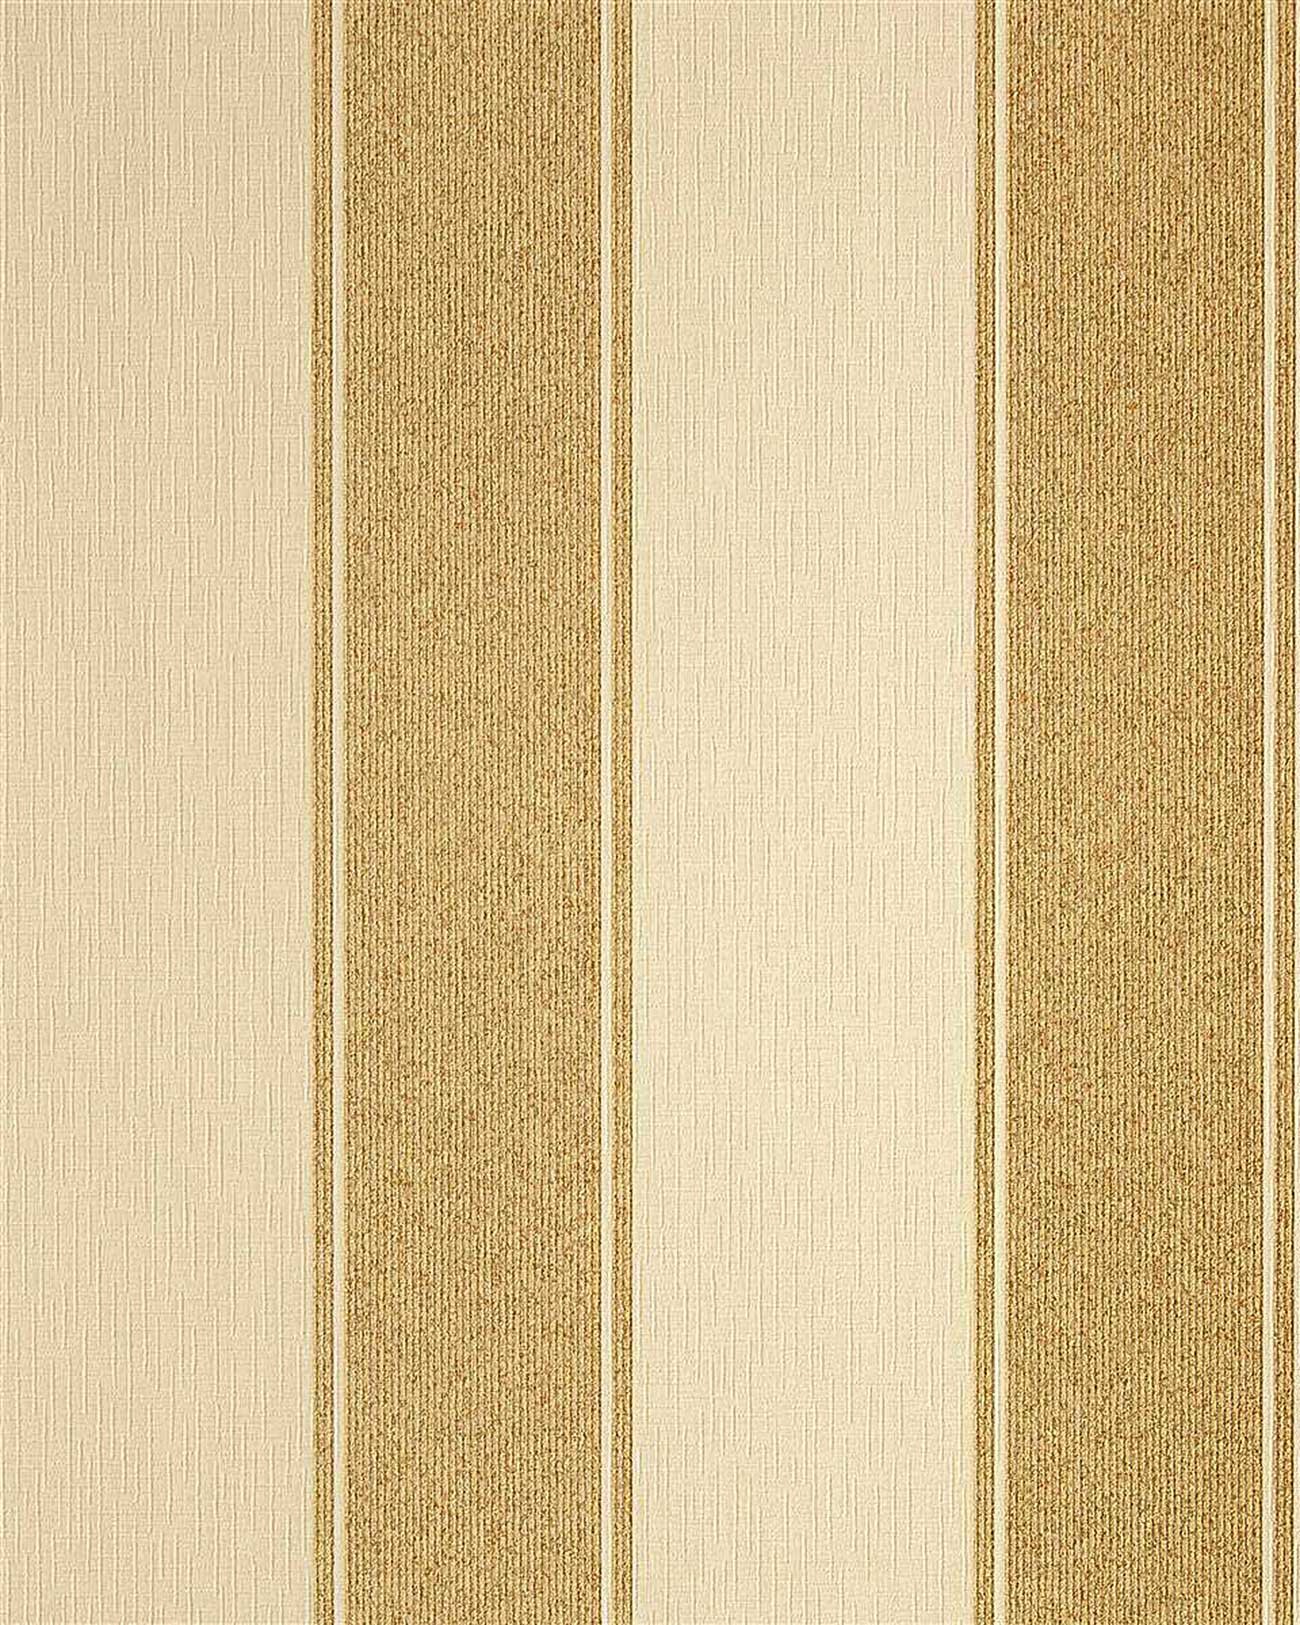 cream striped wallpaper,beige,brown,yellow,tan,wood